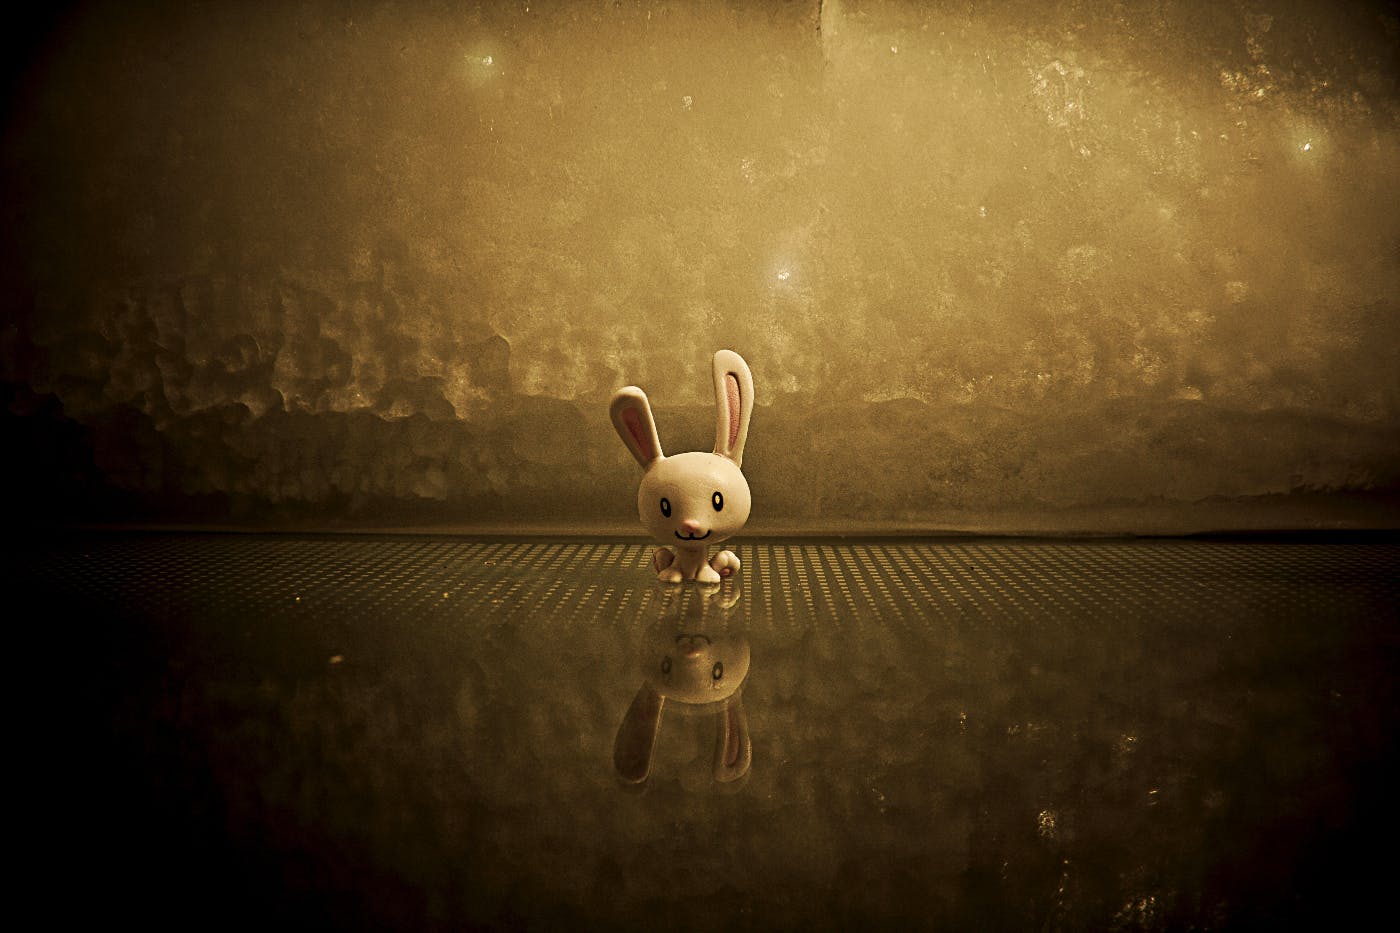 A small cartoon bunny in a sepia toned environment